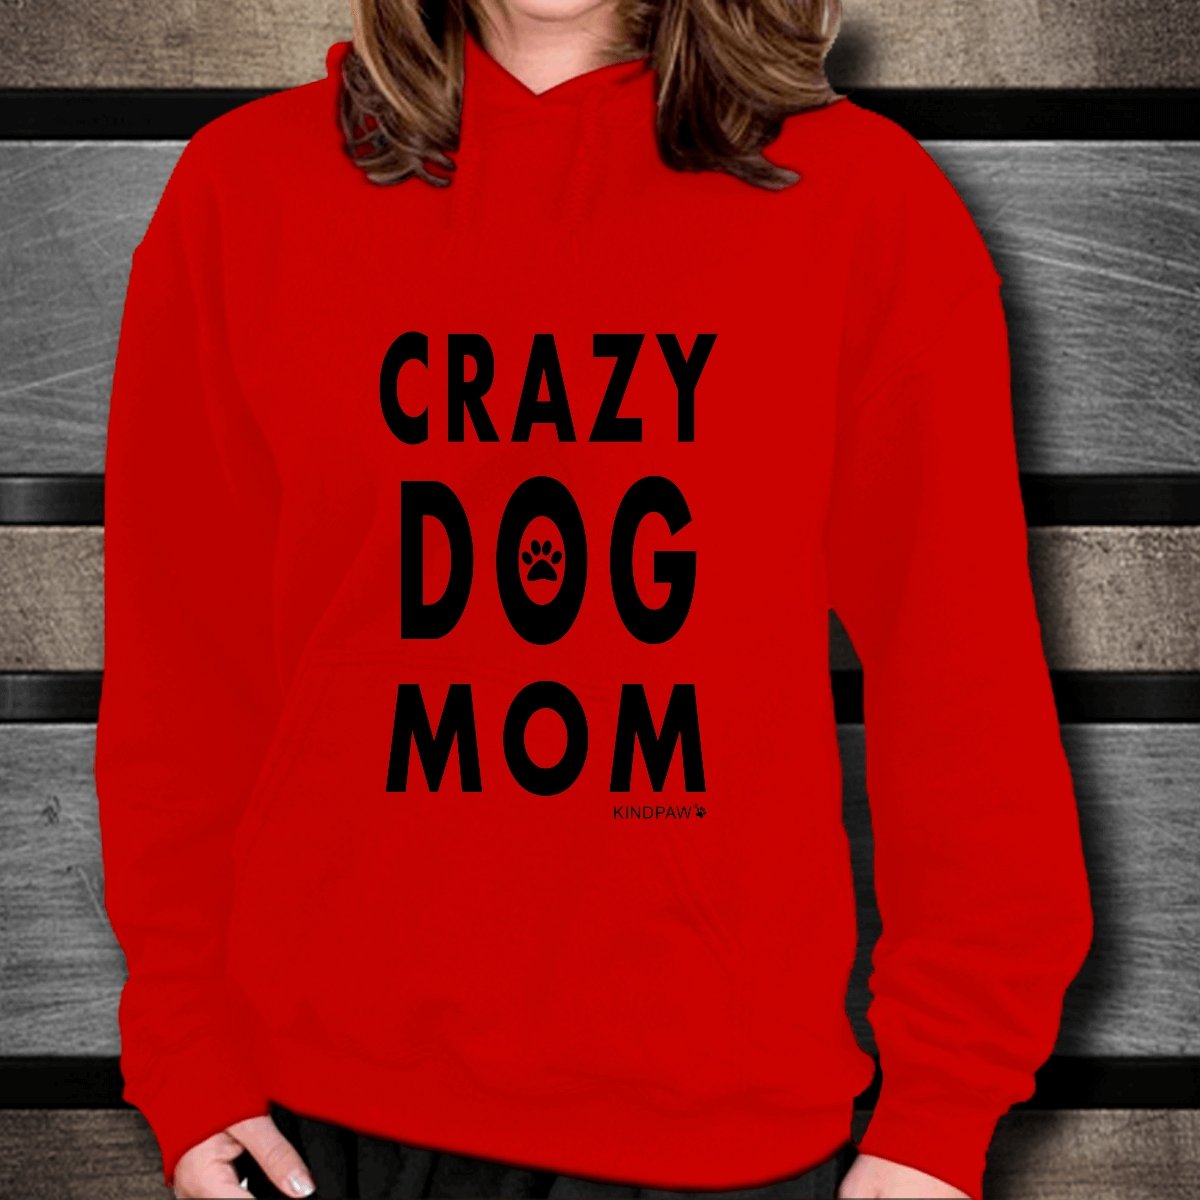 Dog lover hoodies Crazy dog mom